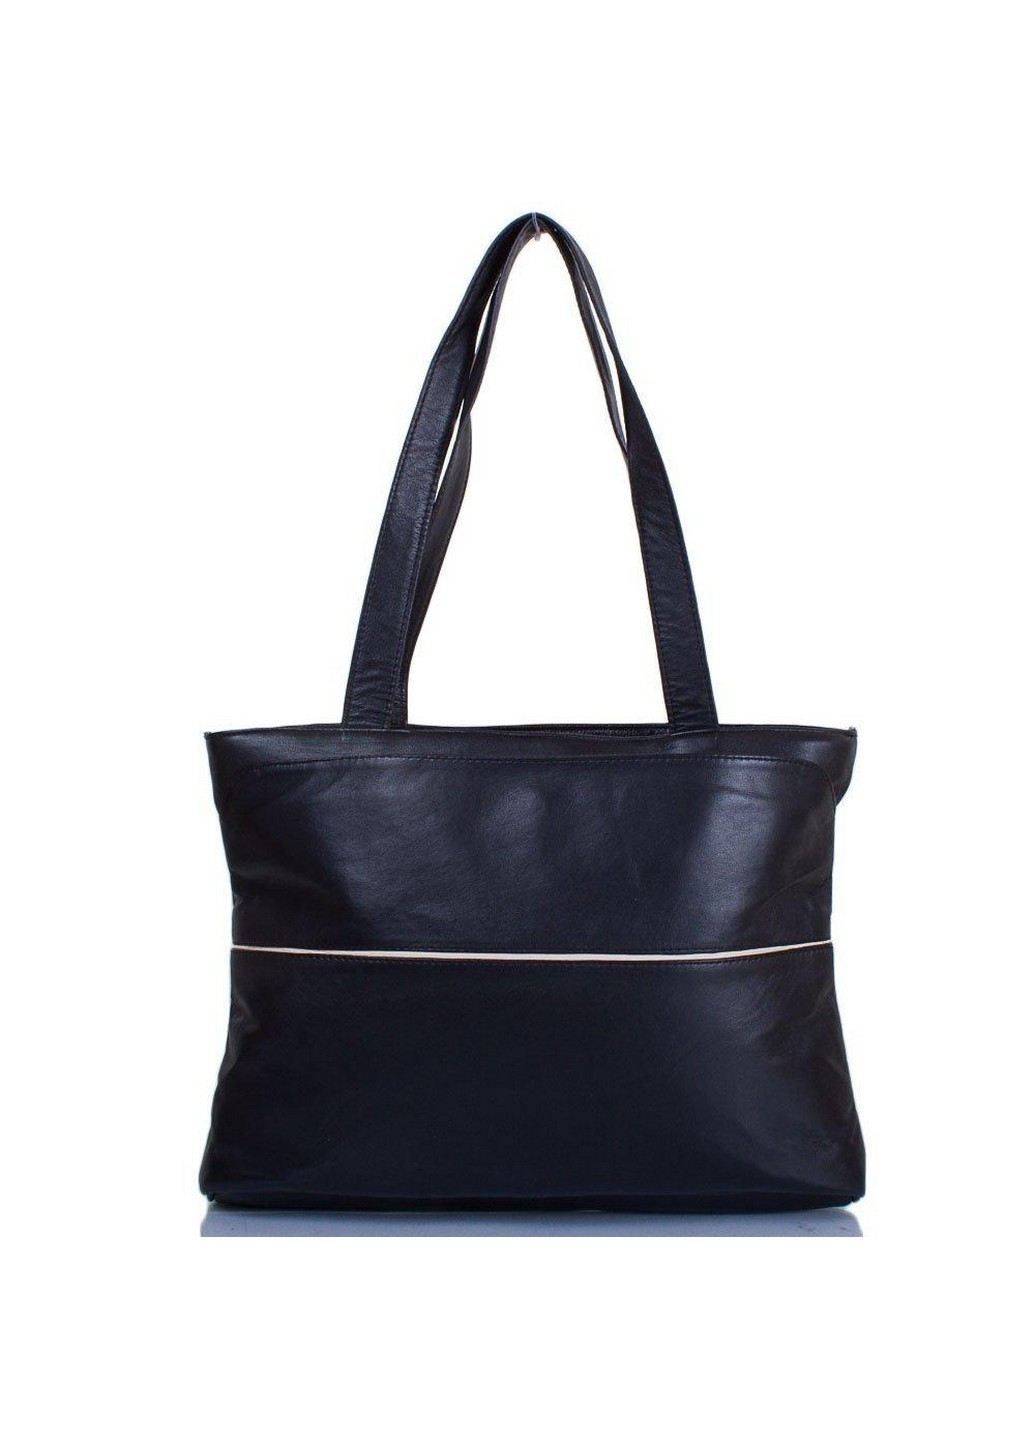 Кожаная сумка-шоппер женская 38х29х6,5 см TuNoNa (258032336)